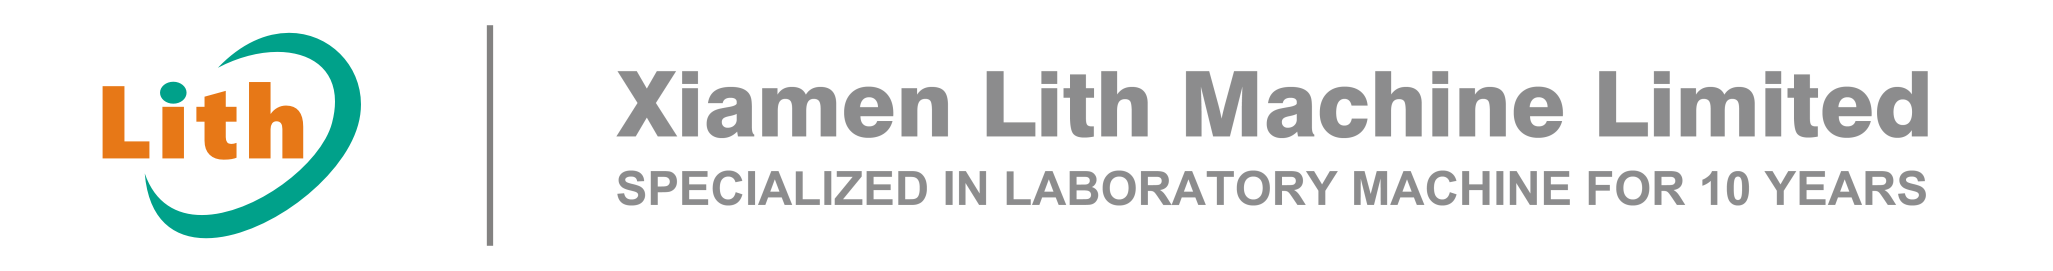 Xiamen Lith Machine Limited